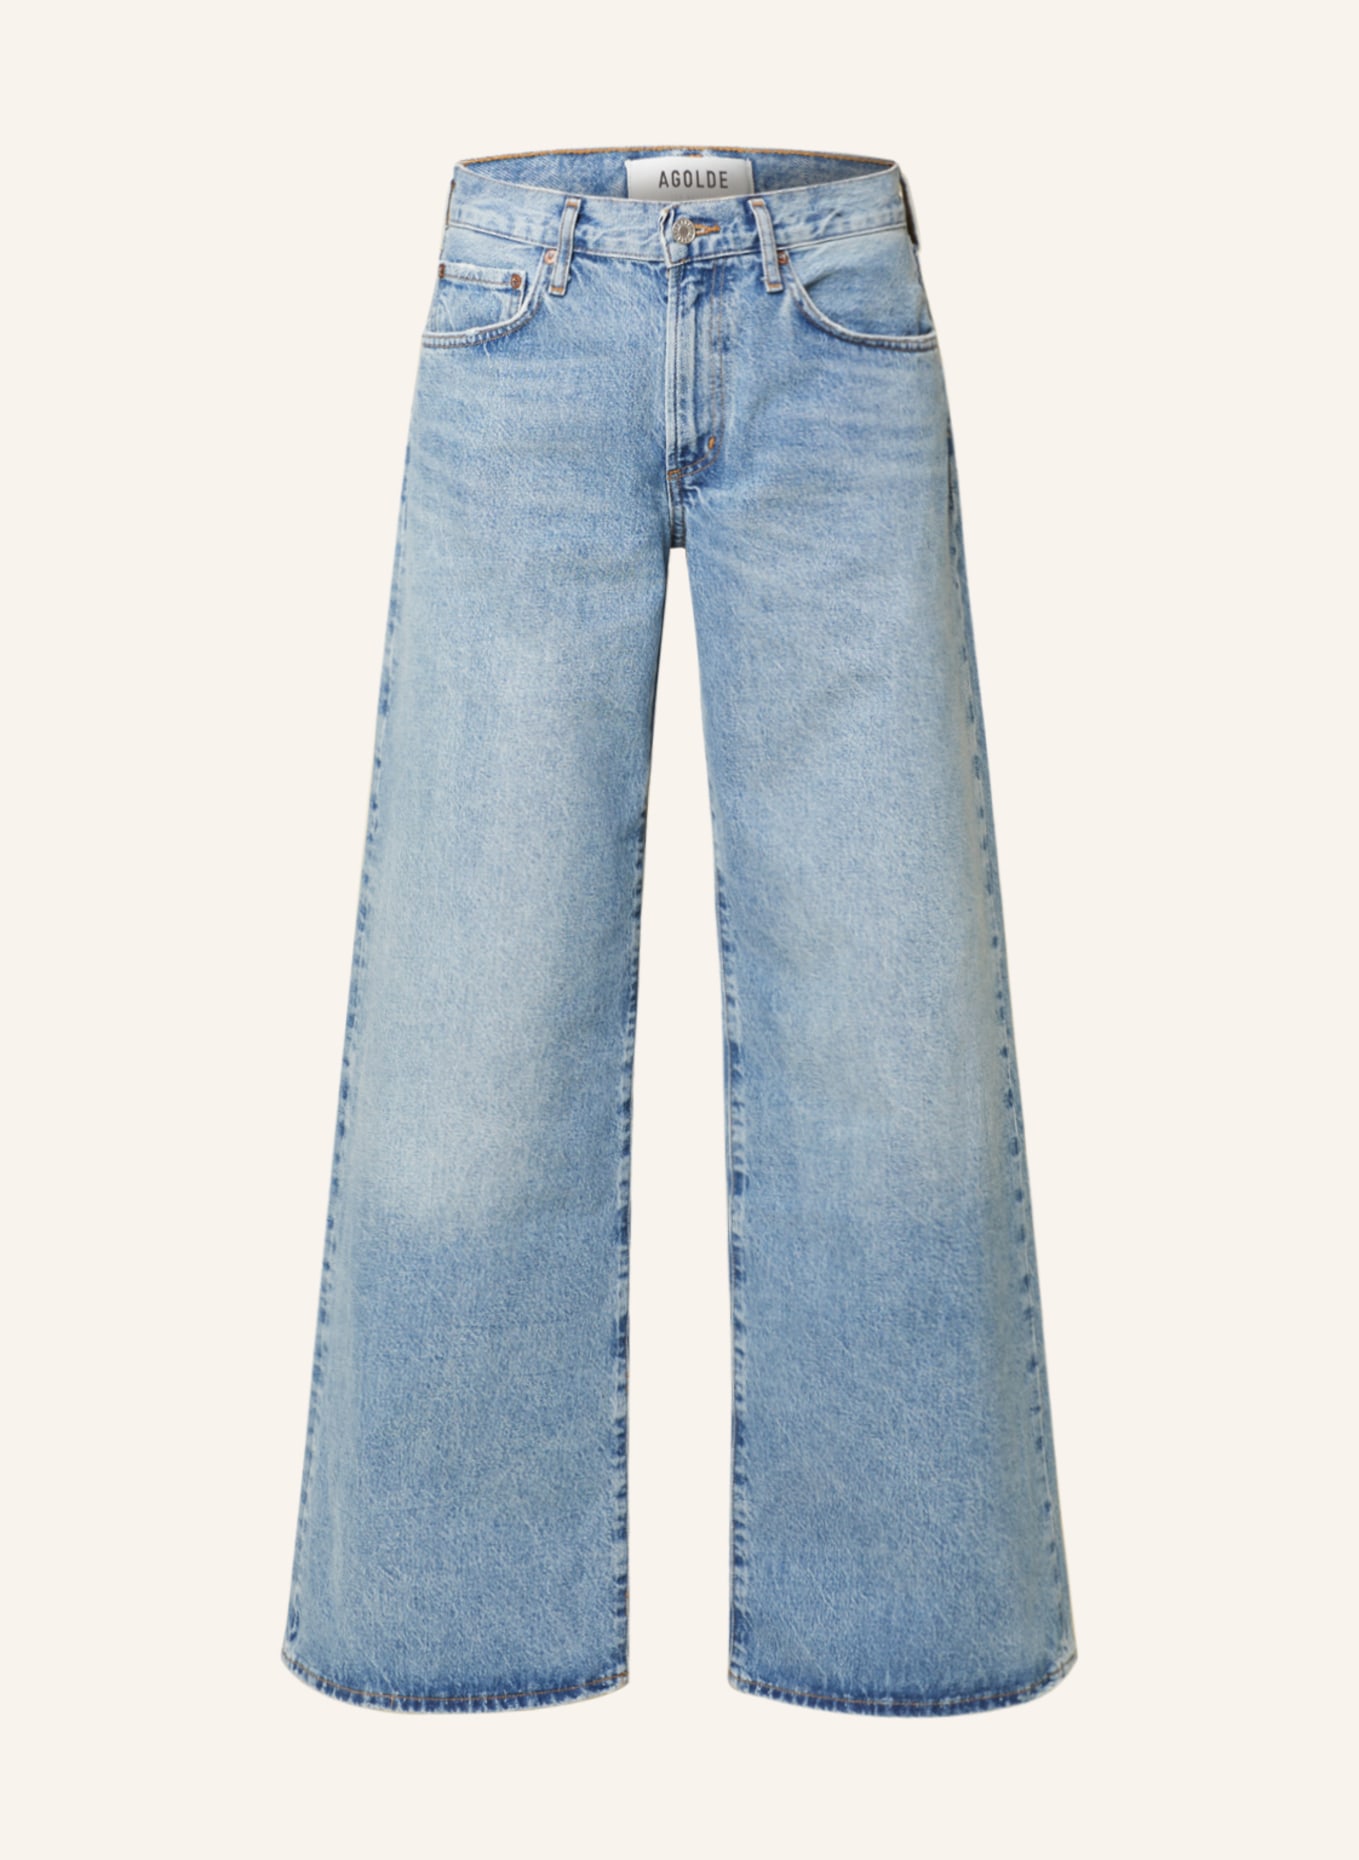 AGOLDE Flared Jeans CLARA, Farbe: libertine vint med ind (Bild 1)